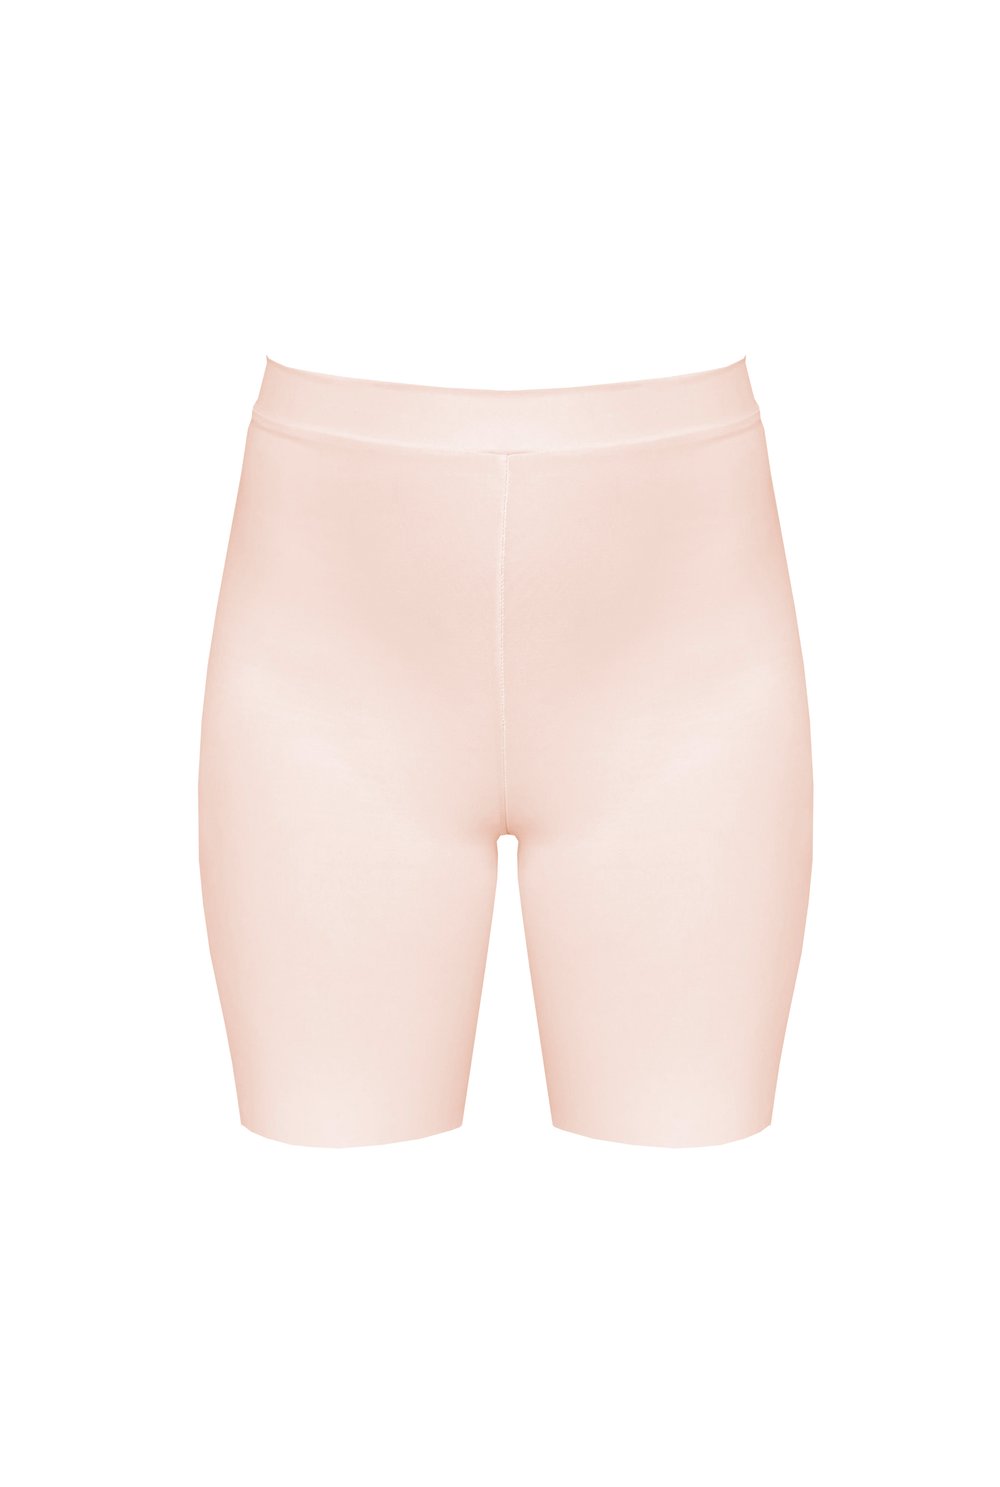 Image of Streamlined Biker Shorts - Peach